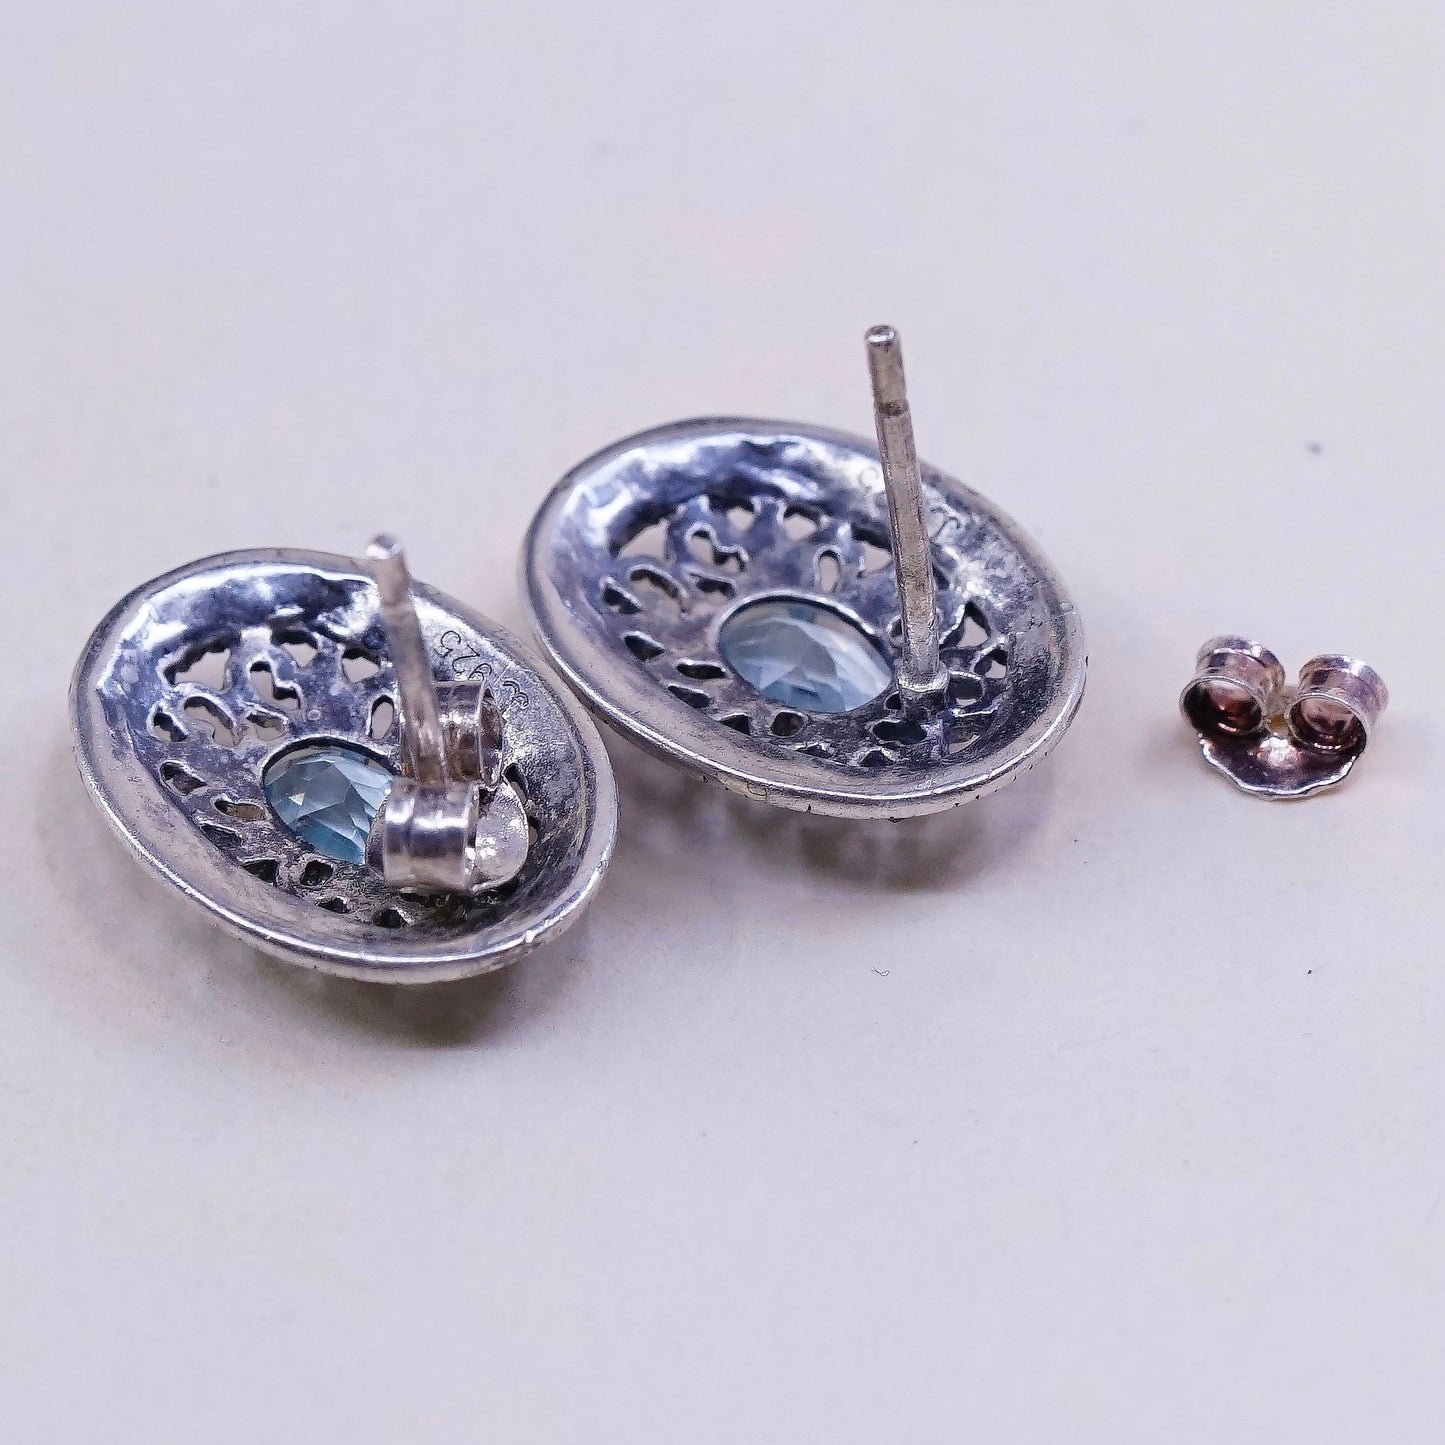 vtg Sterling silver handmade earrings, 925 studs w/ topaz and marcasite